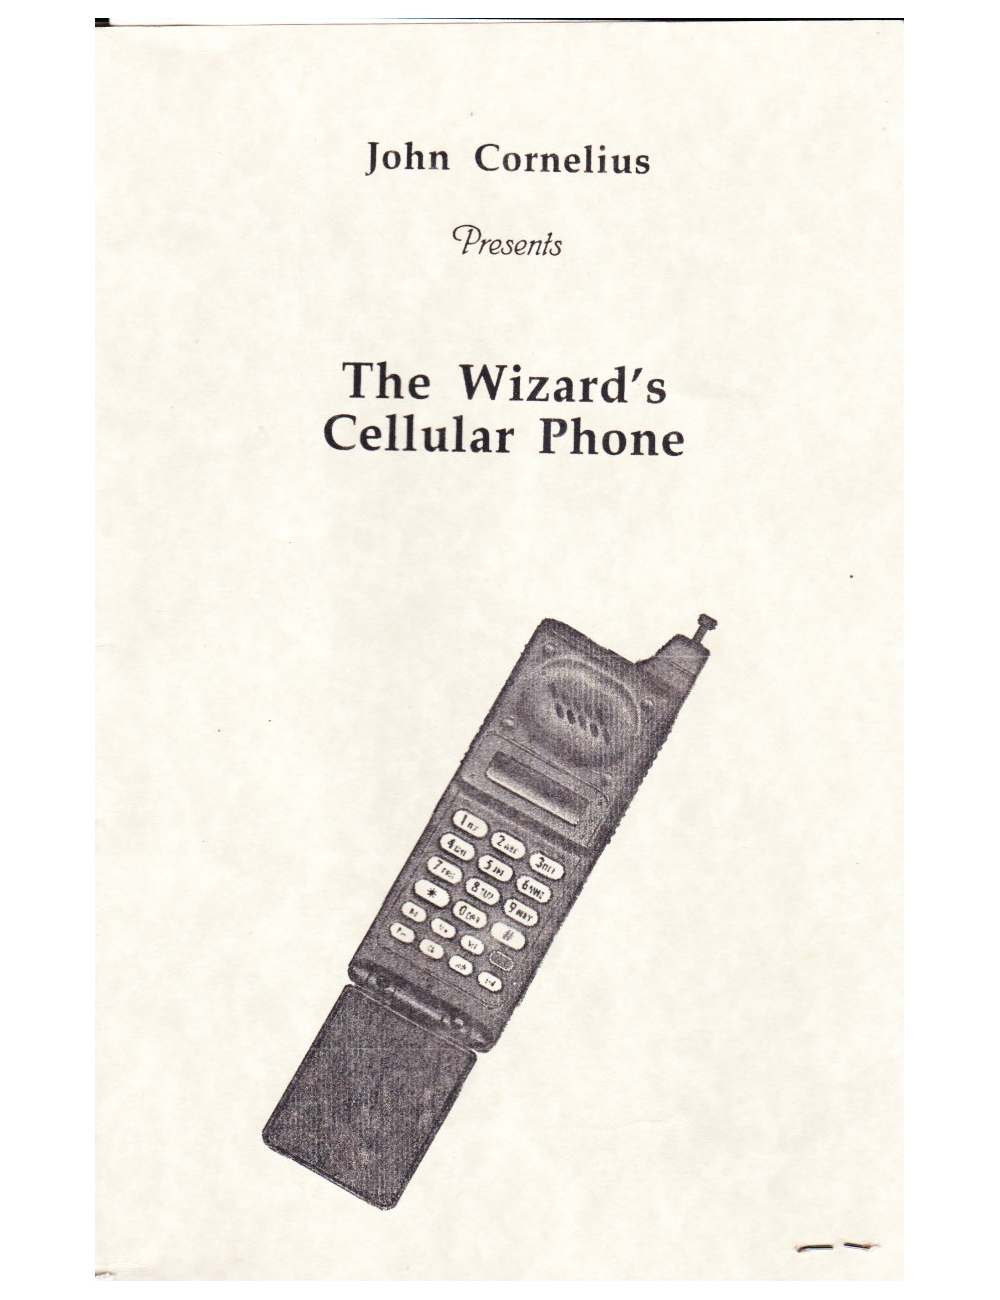 The Wizard’s Cellular Phone (John Cornelius)